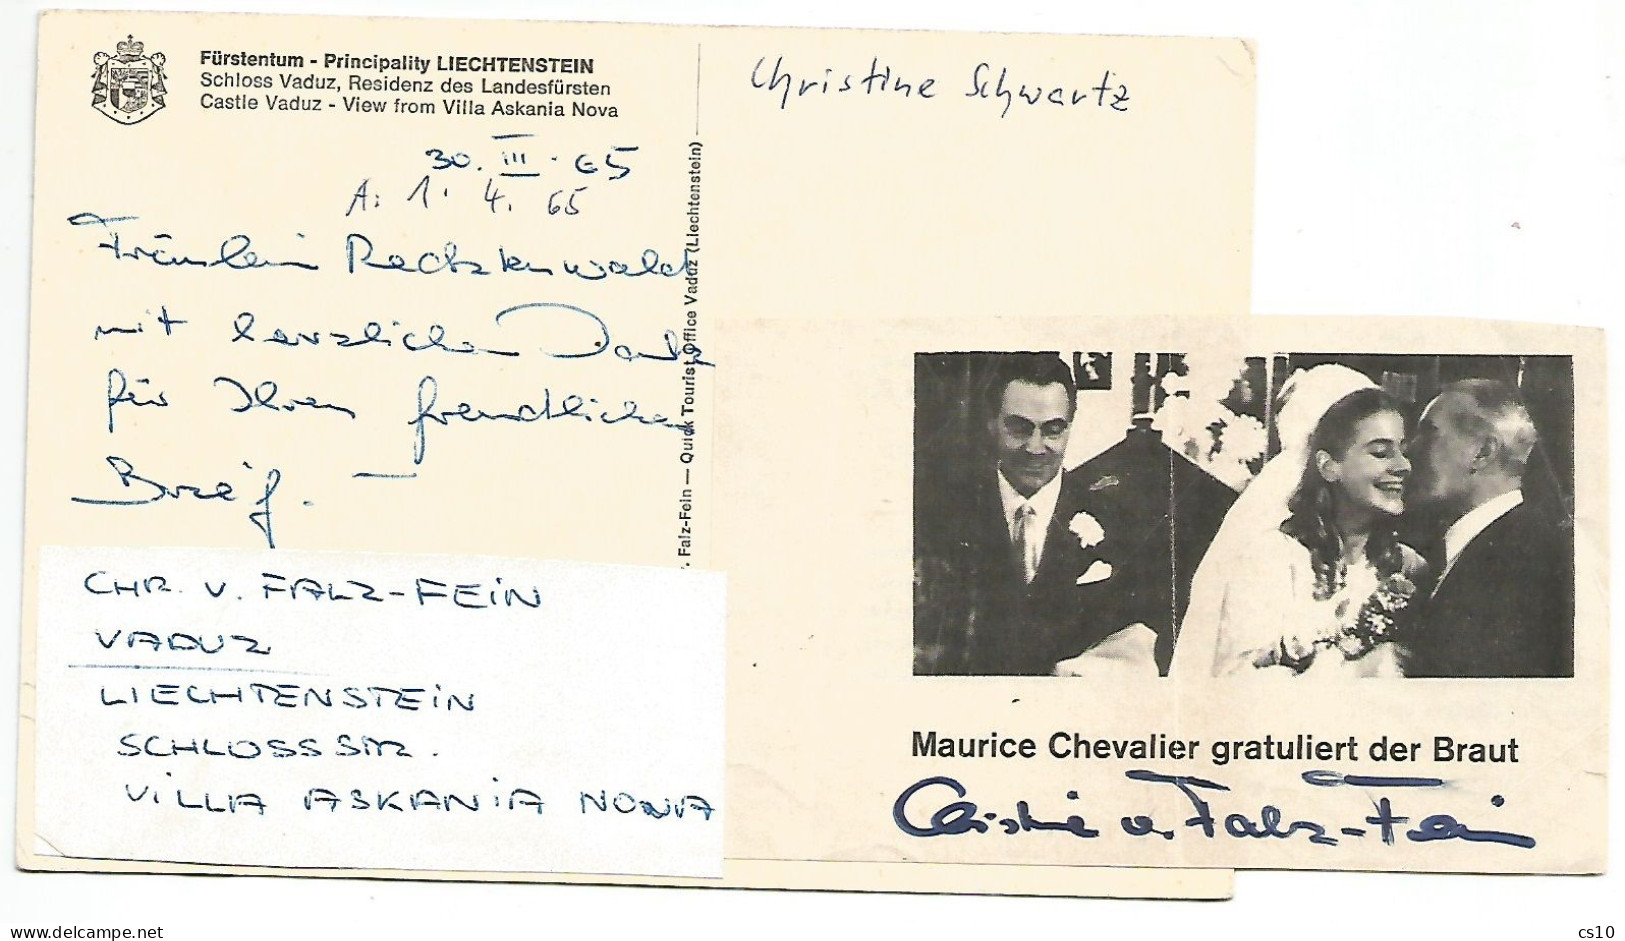 Maurice Chevalier Original Photo PPC Handsigned & Sent By The Artist From Goteborg 11nov1960 To Italy + Magazine News!!! - Zangers & Muzikanten